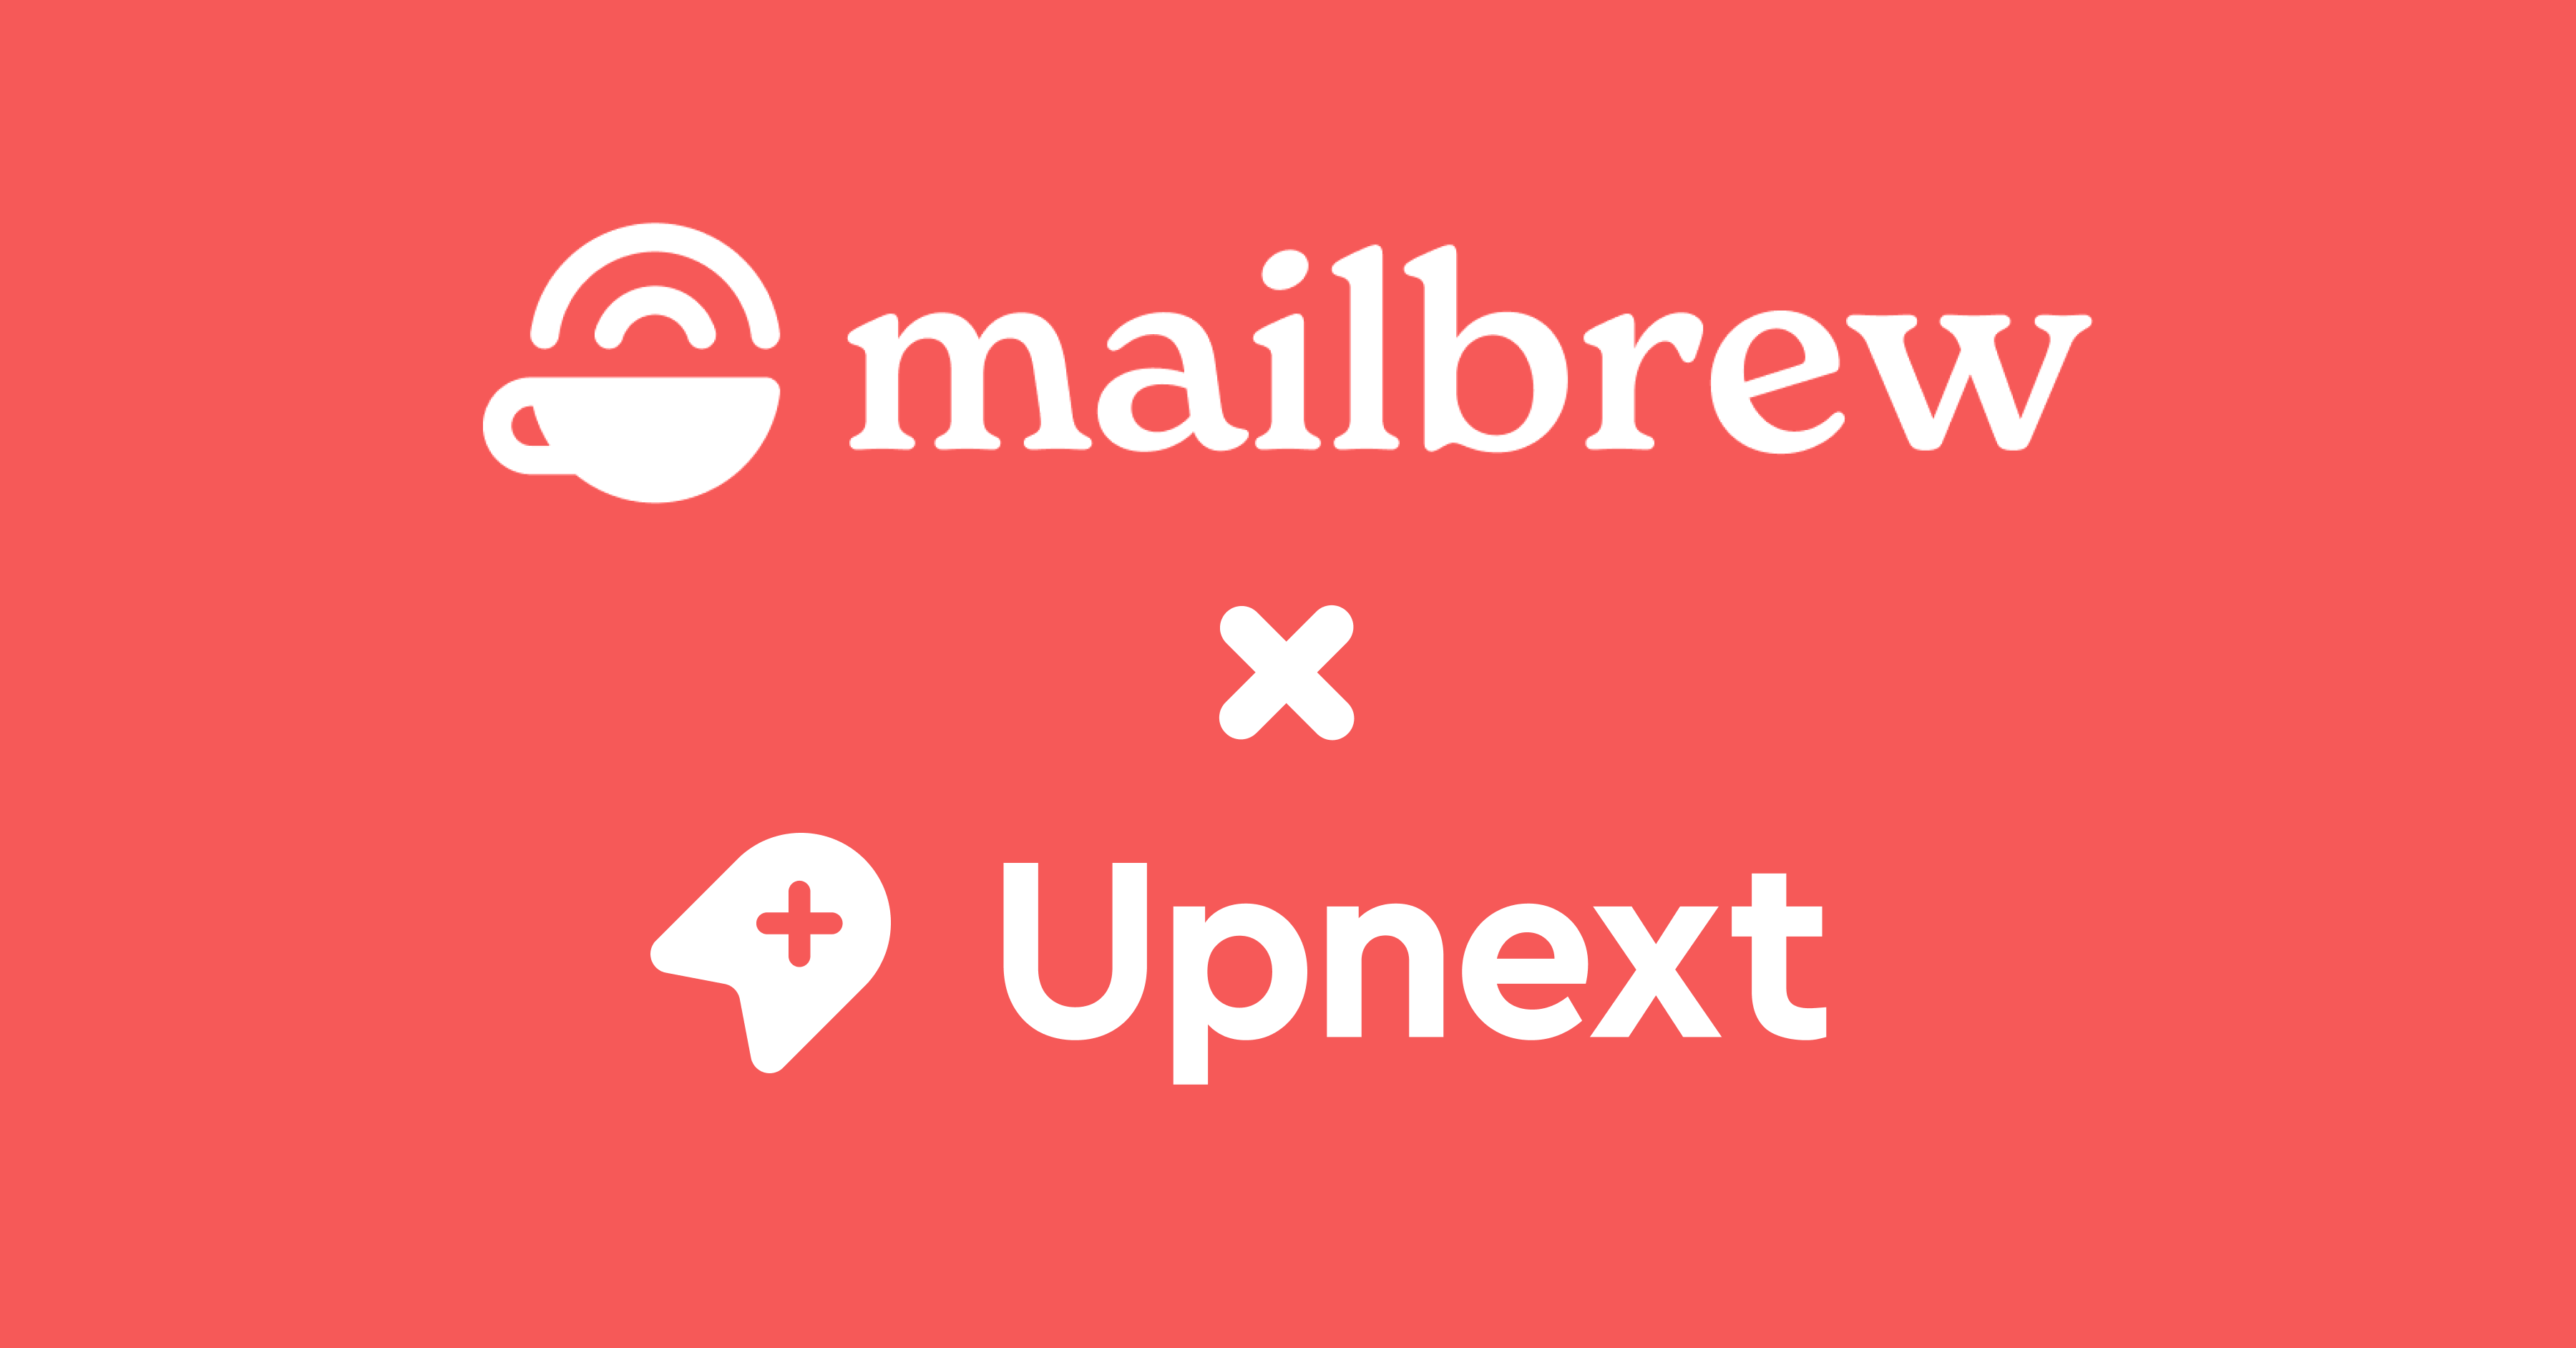 Mailbrew x Upnext